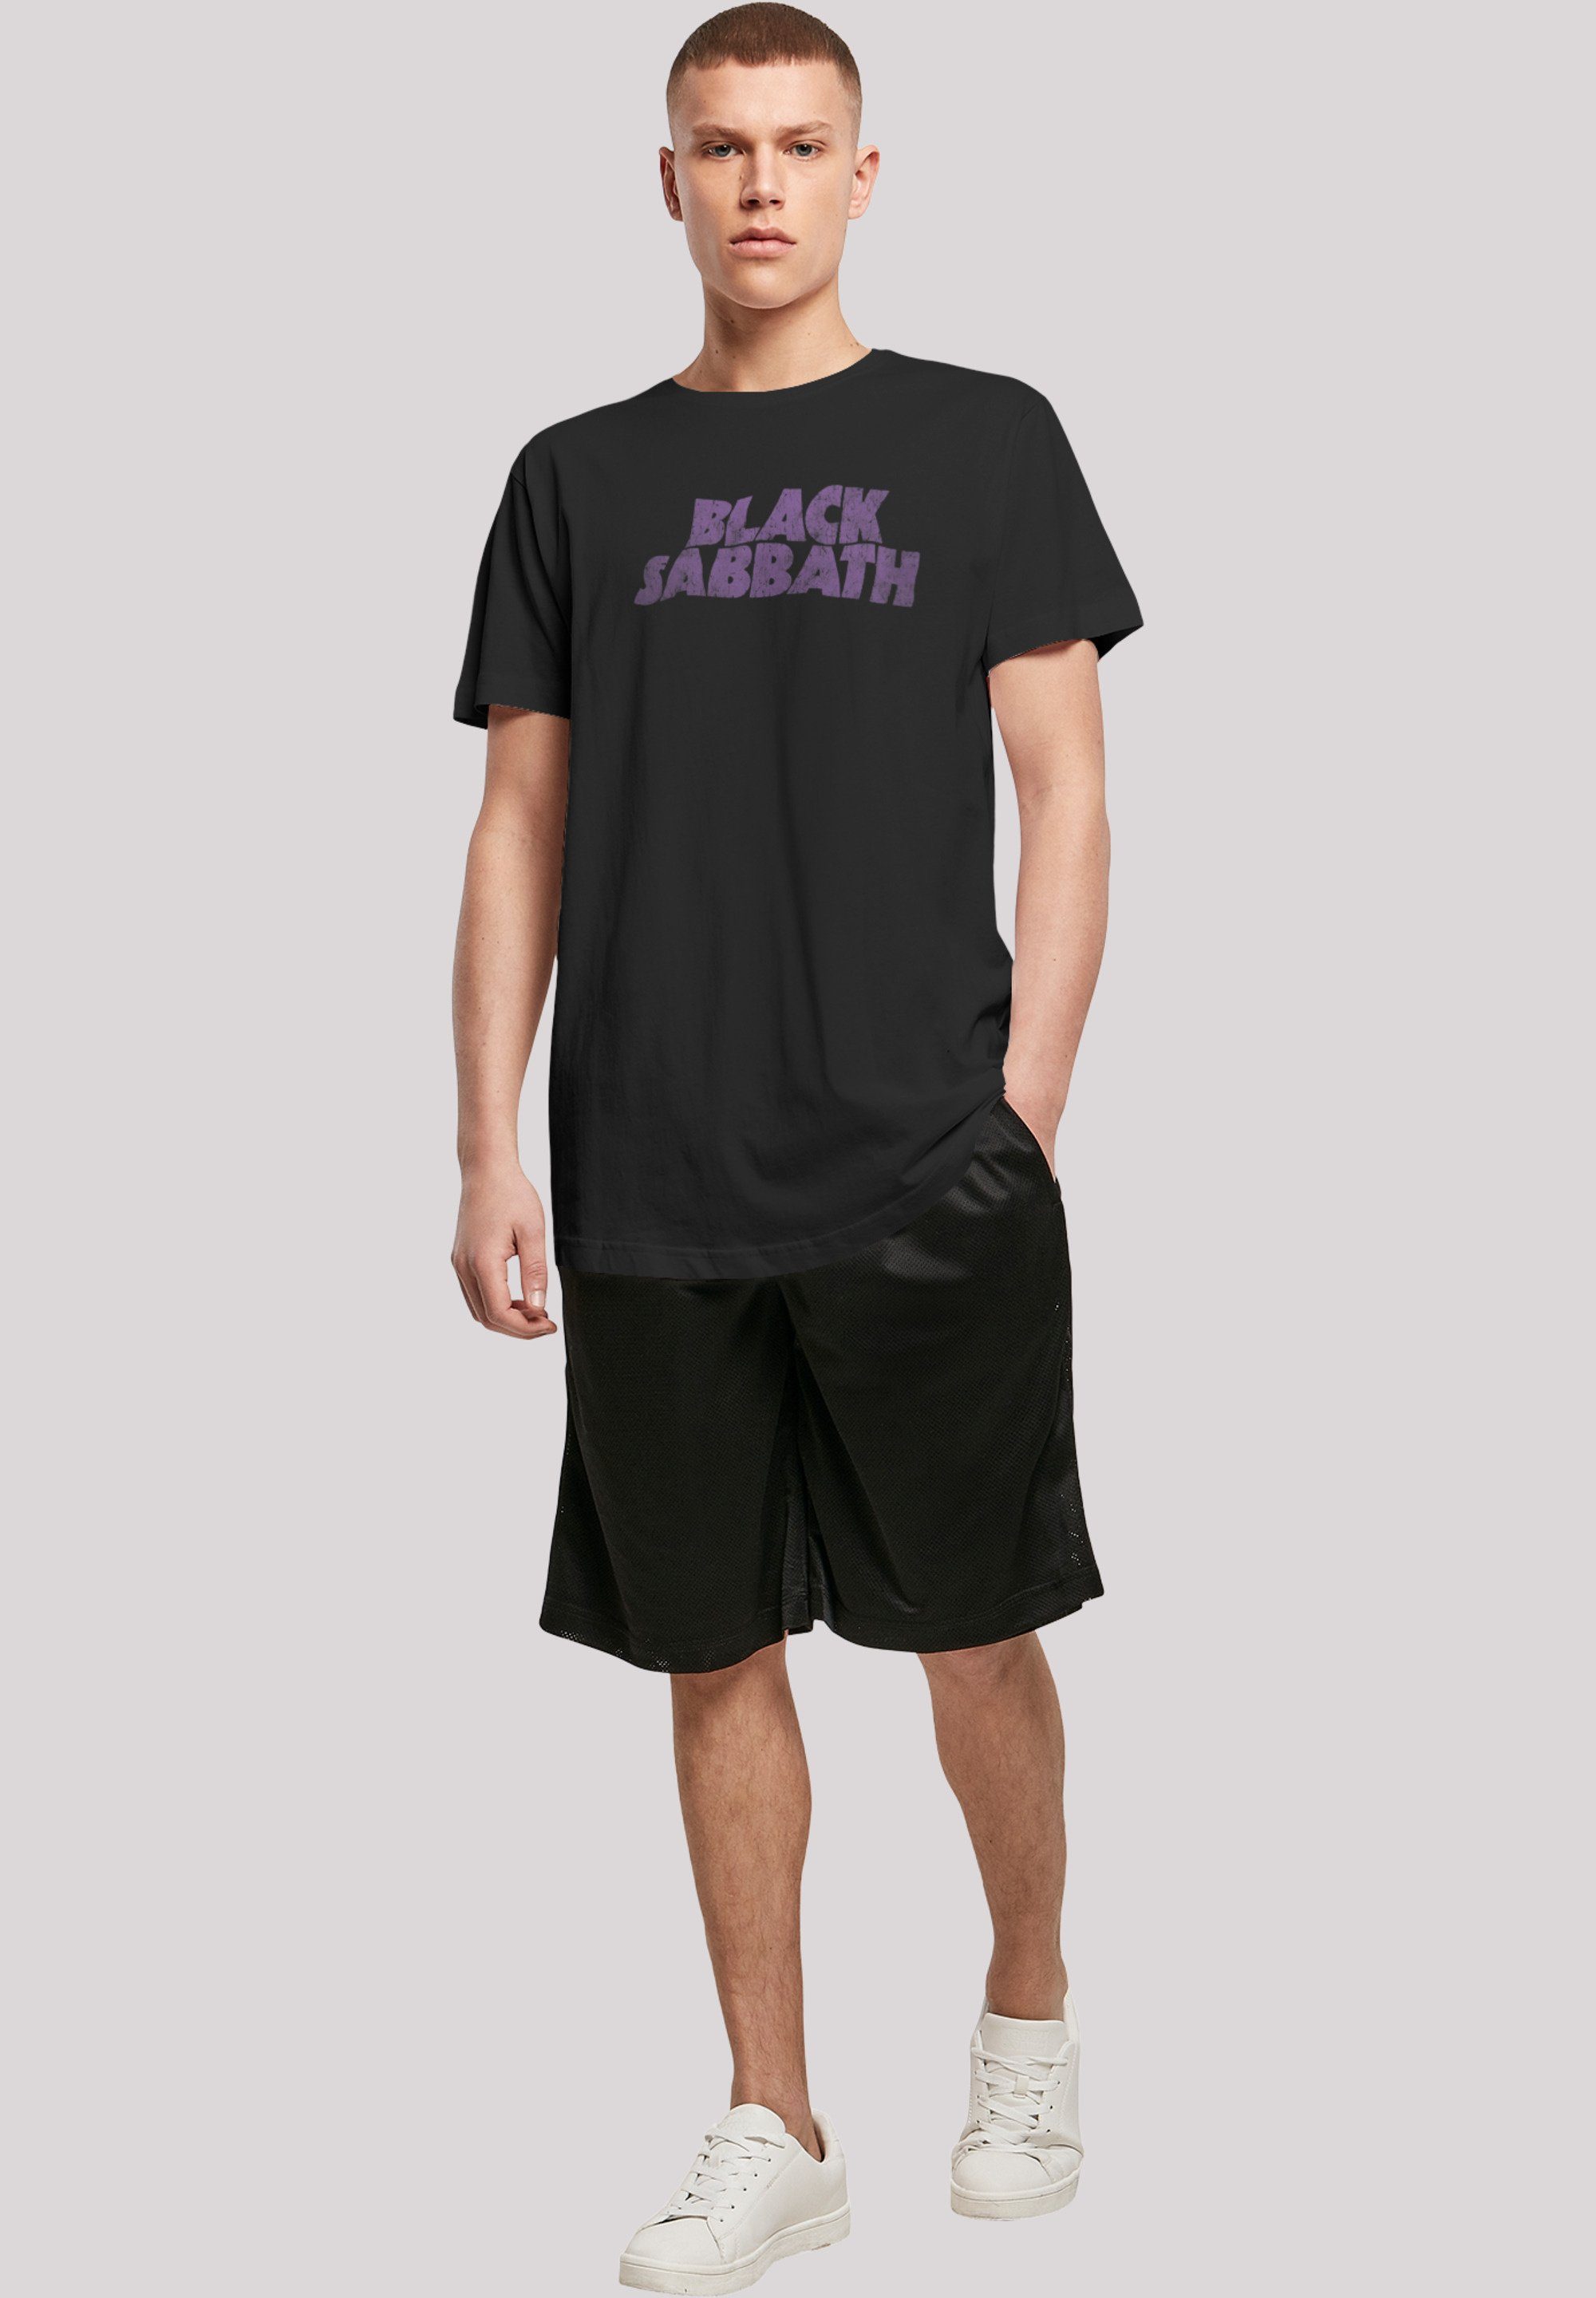 F4NT4STIC T-Shirt Black Sabbath Heavy Logo Black Print schwarz Distressed Band Metal Wavy